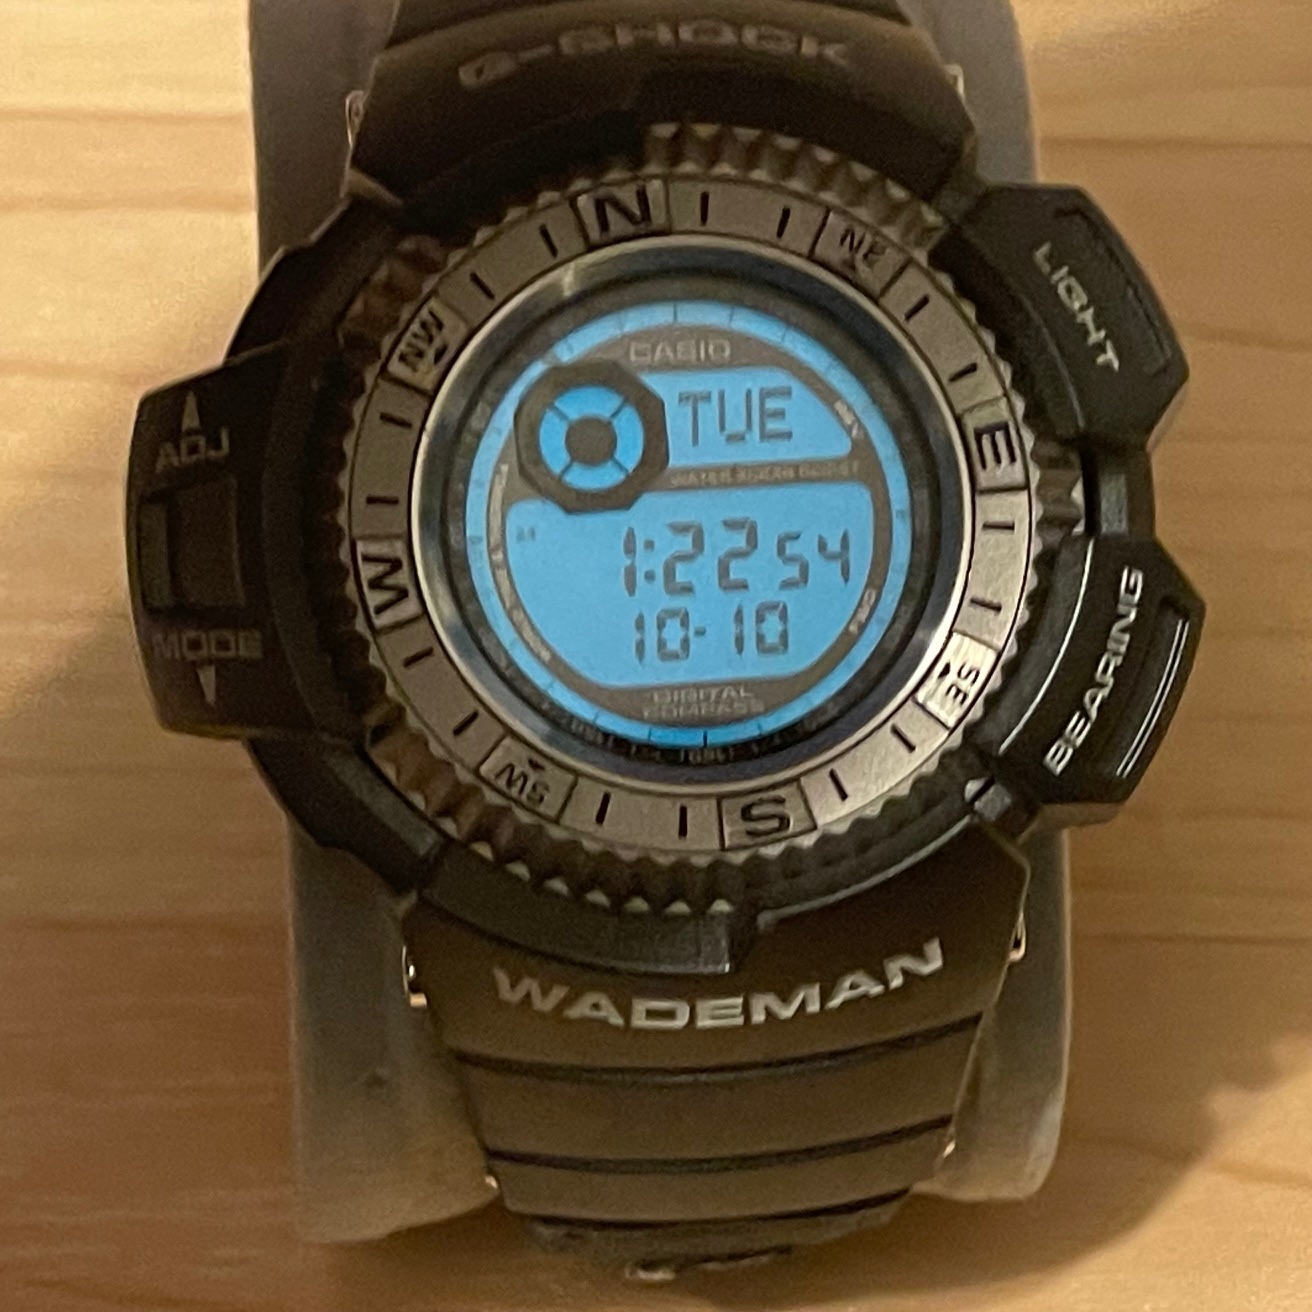 WTS] Casio G-Shock DW-9800BJ-1 Wademan Digital Compass Master of G